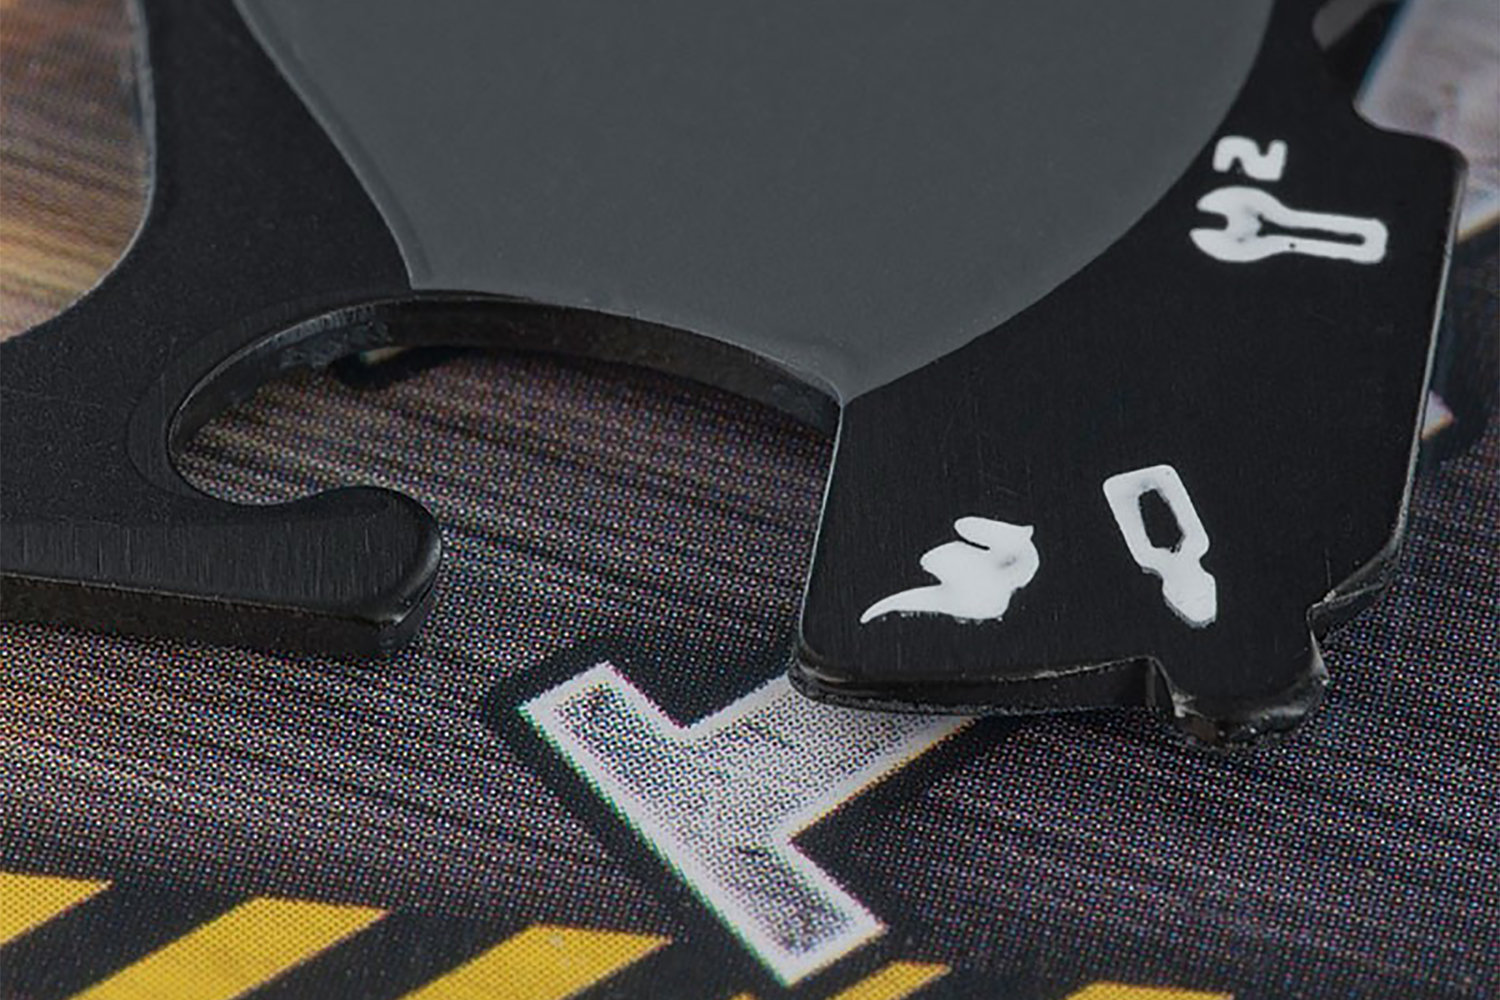 Wallet Ninja 2.0 Ultra-Thin 20-in-1 Multi-Purpose Mirror Tool - Black